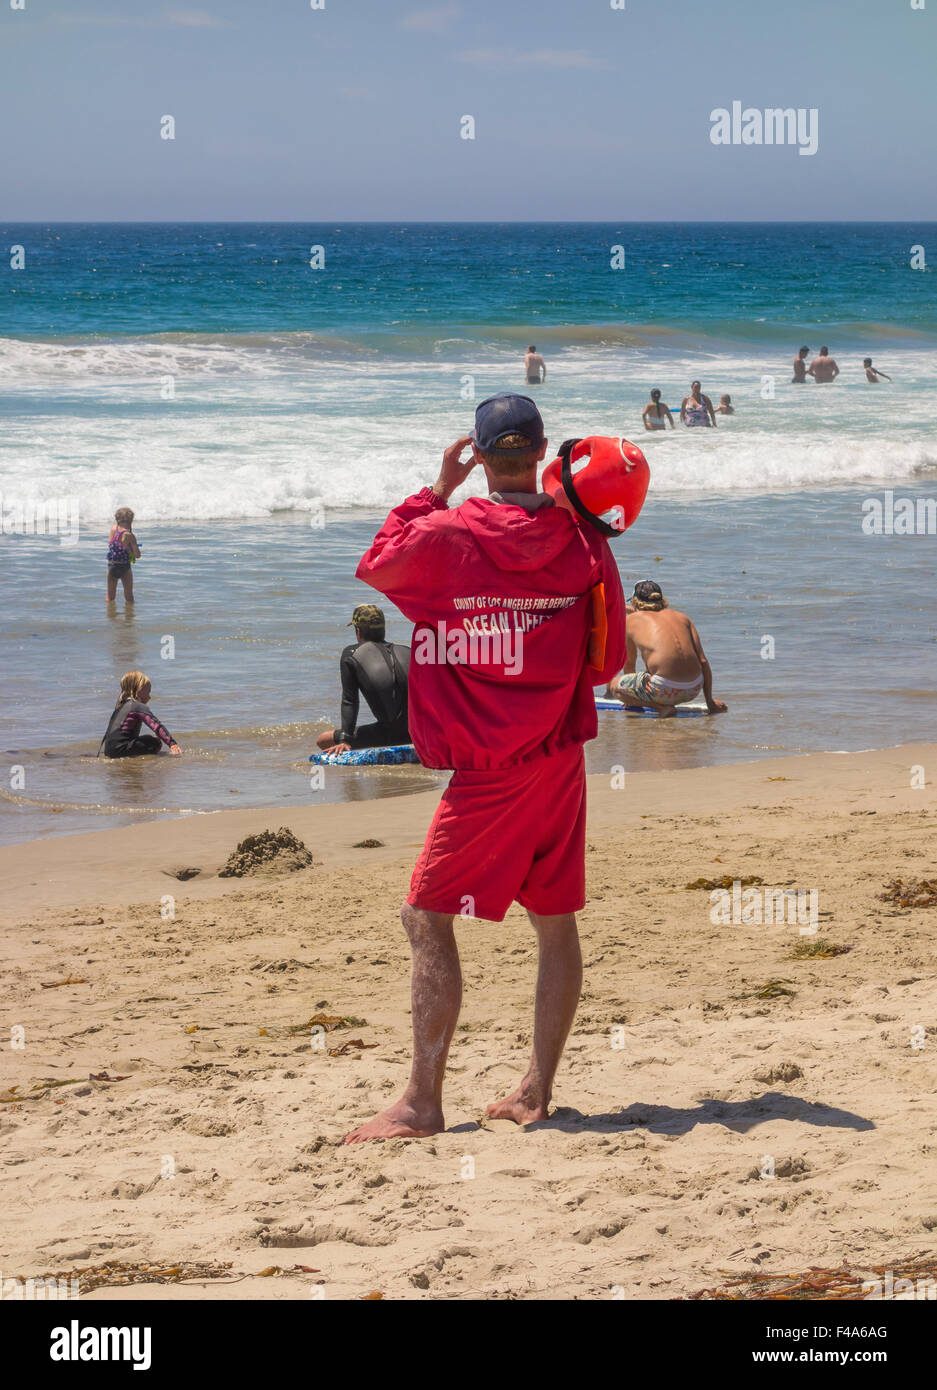 ZUMA BEACH, CALIFORNIA, STATI UNITI D'AMERICA - Lifeguard guardando i bagnanti sulla spiaggia di Zuma, spiaggia pubblica a nord di Malibu. Foto Stock